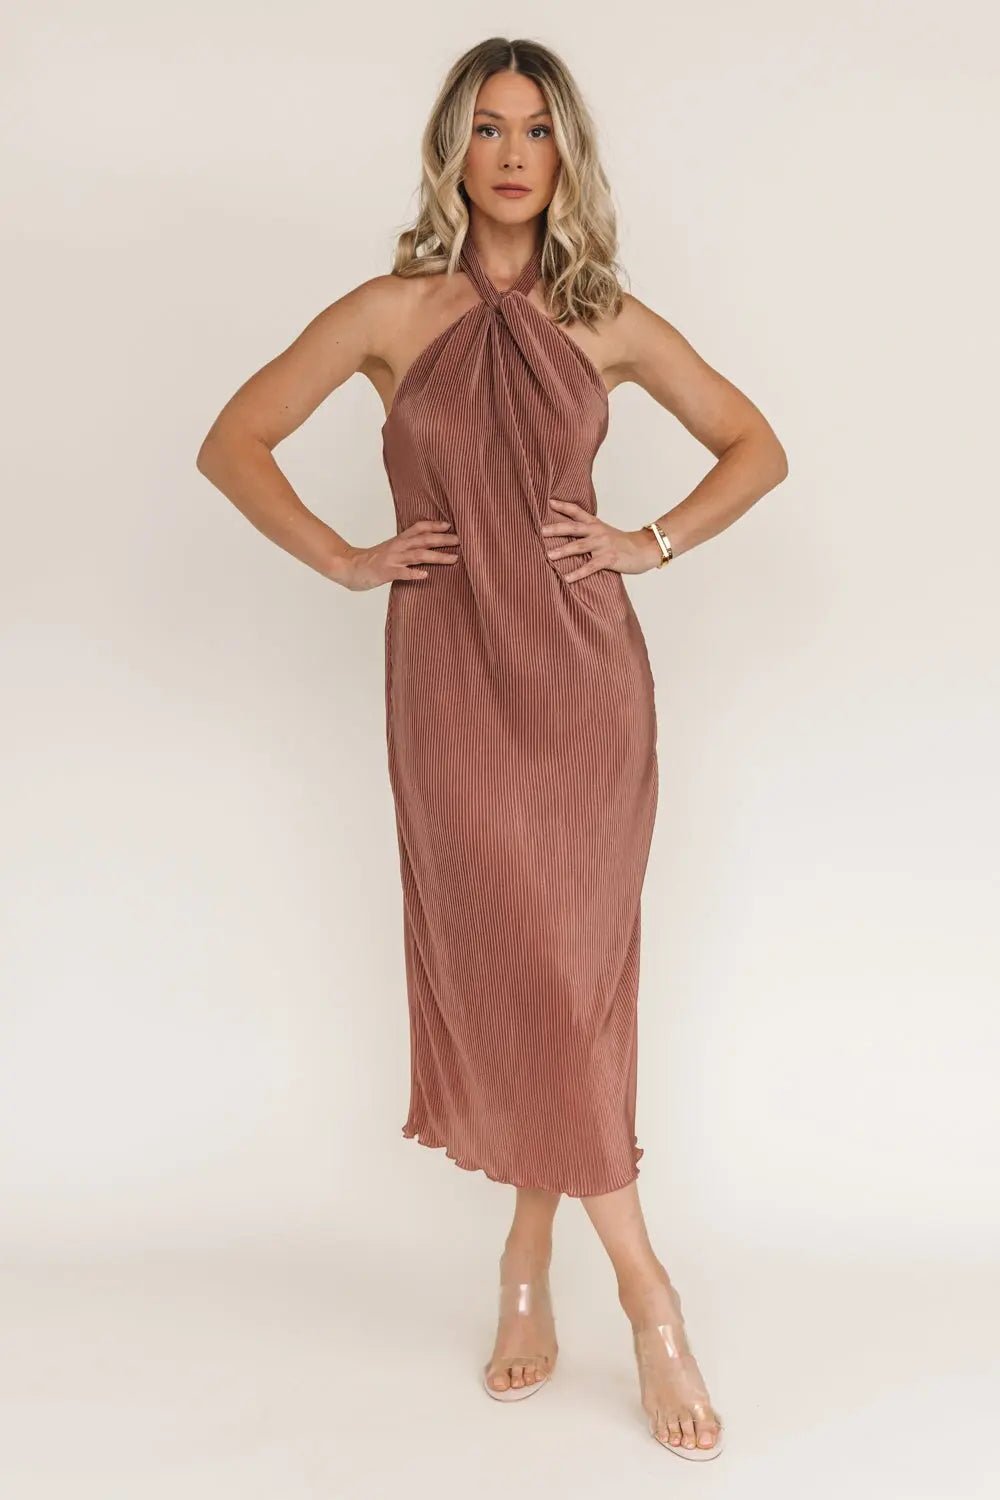 Sunset Secret Bronze Halter Midi Dress: Your Perfect Evening